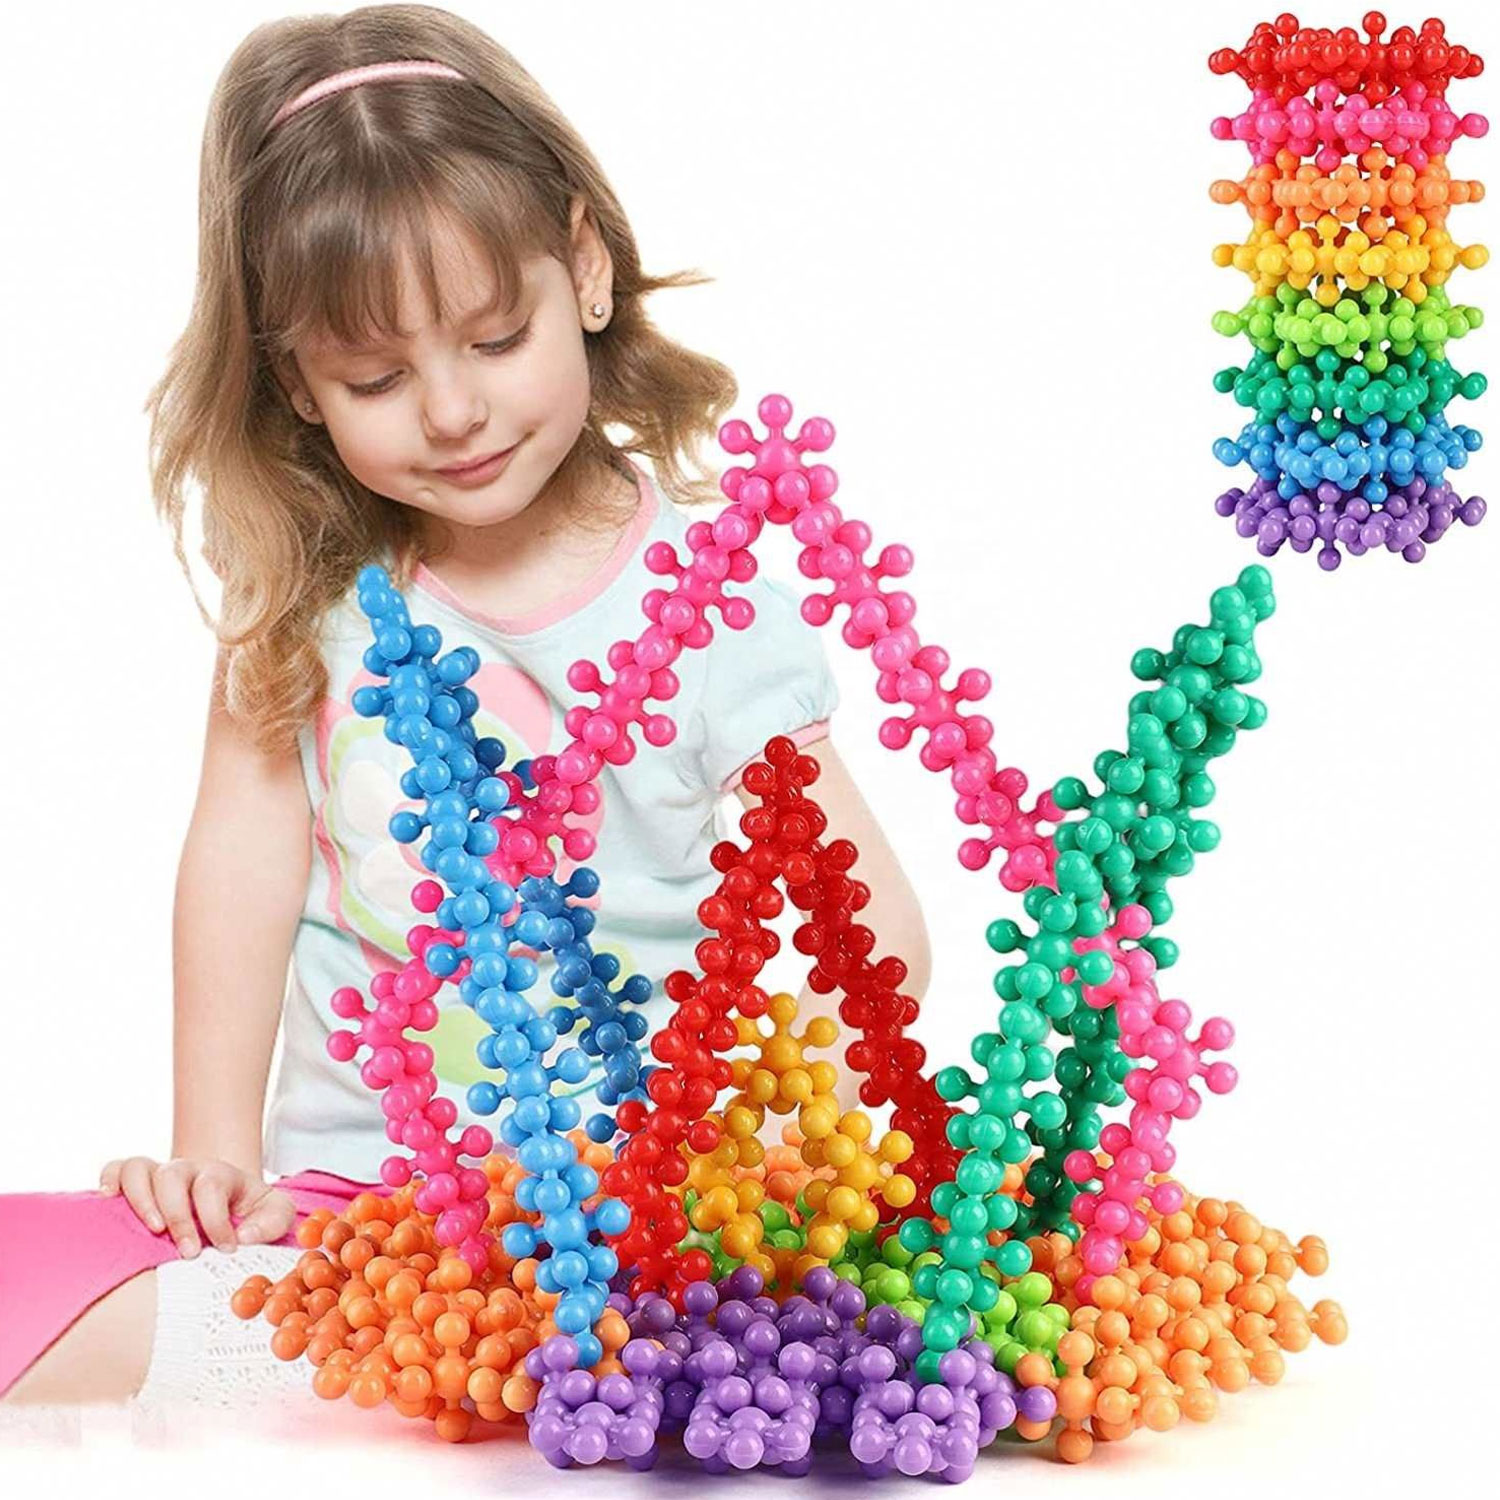 200 Piece 3D Interlocking Building Blocks Stem Toy